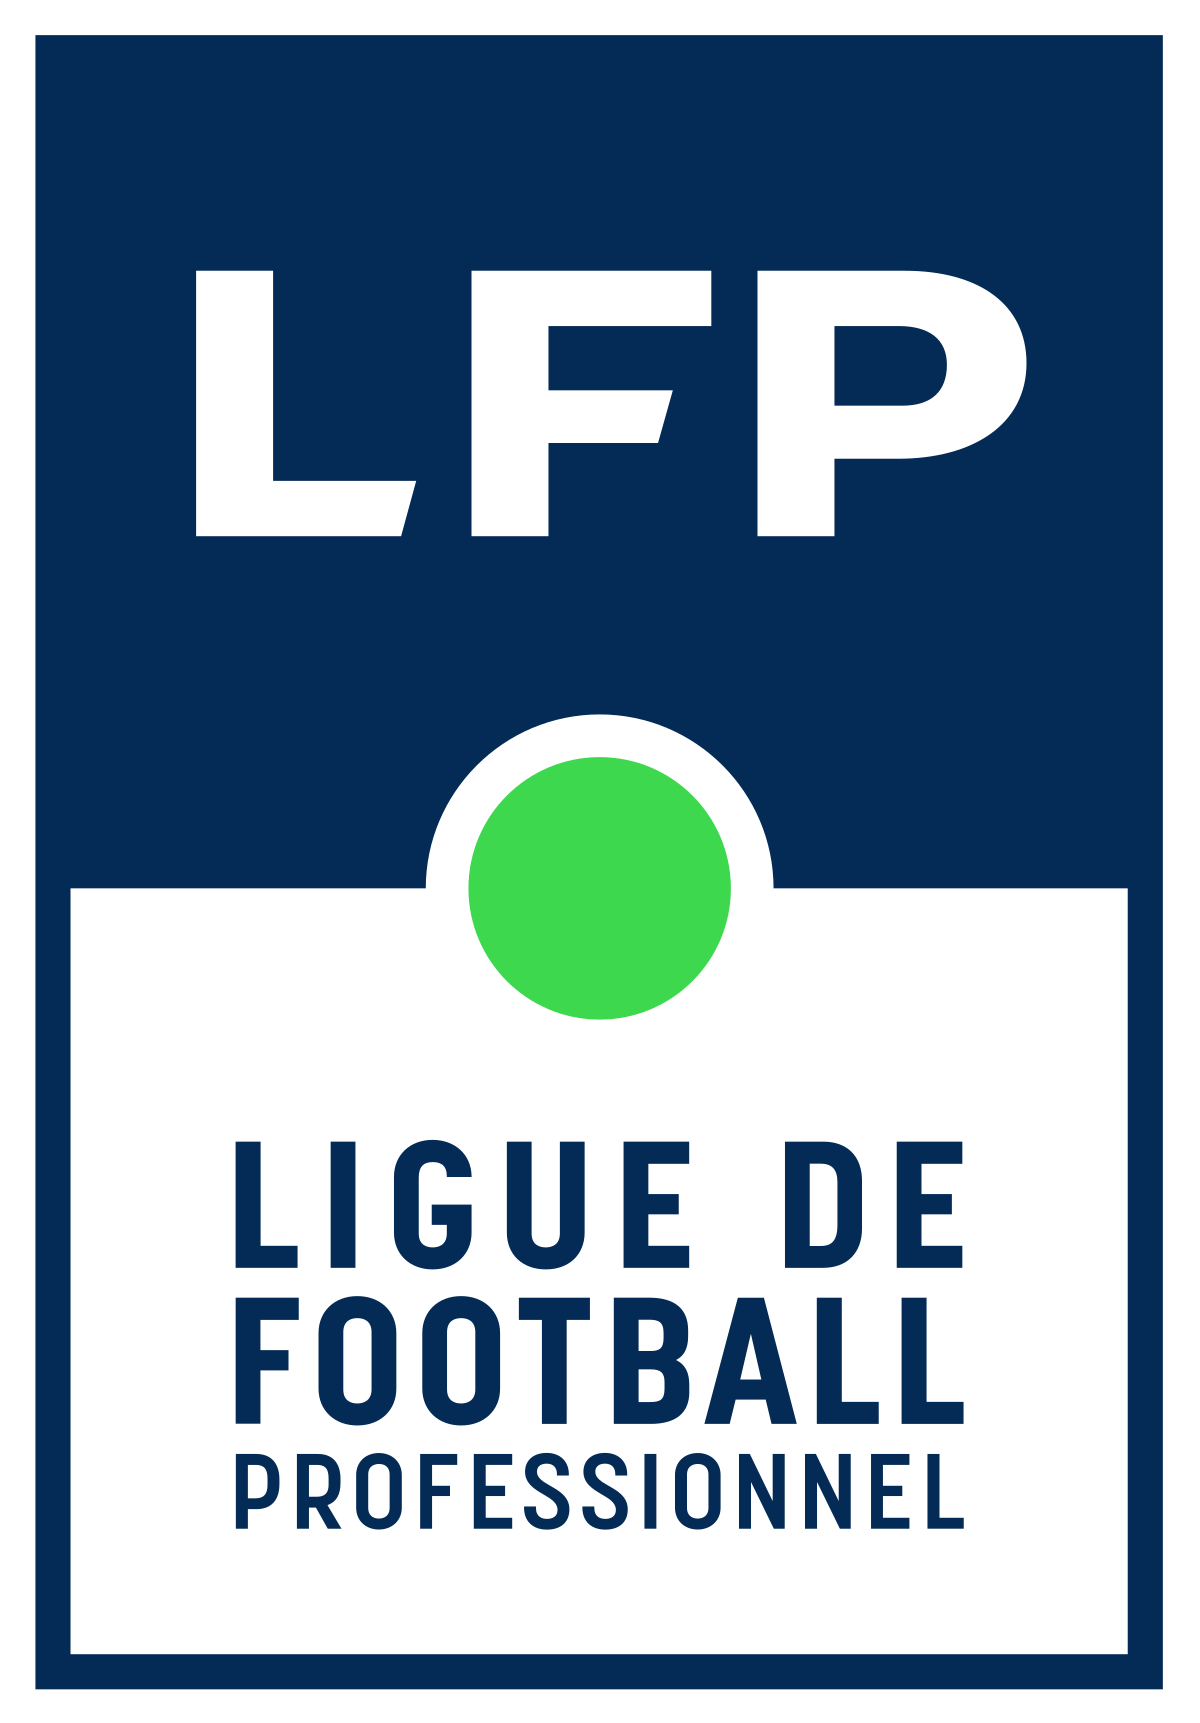 The Ligue De Football Professionnel